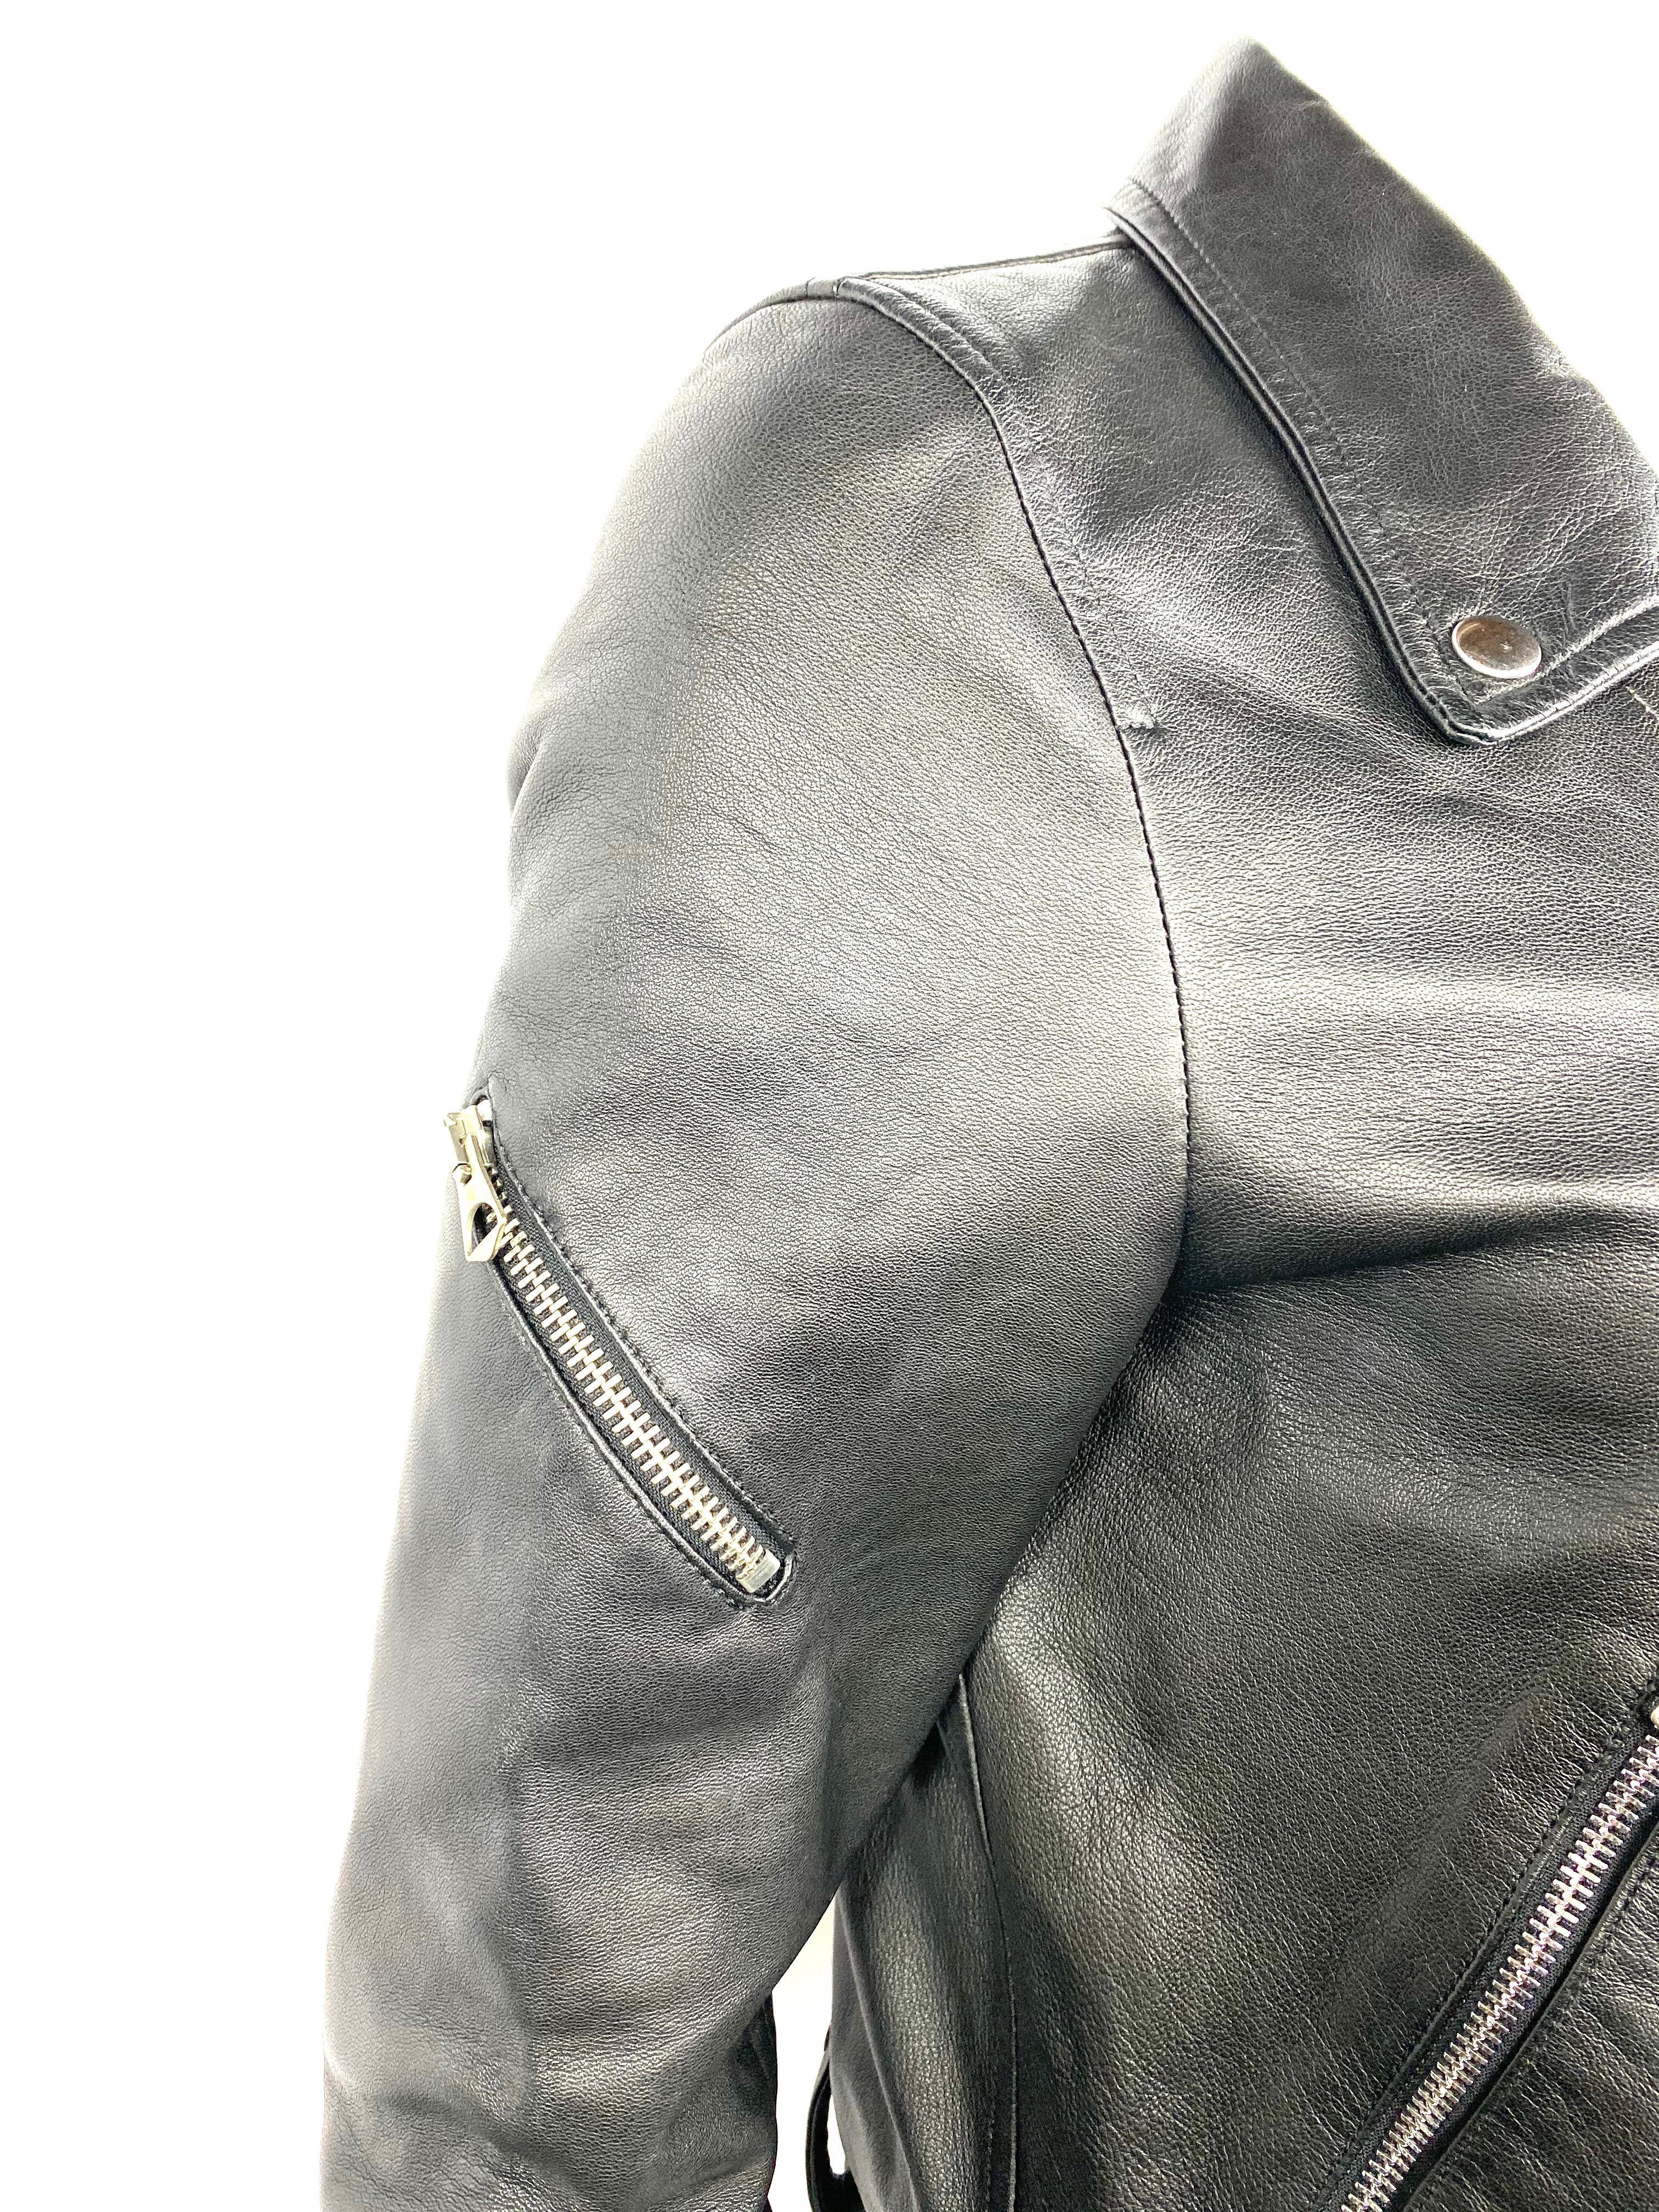 golden goose deluxe brand leather jacket